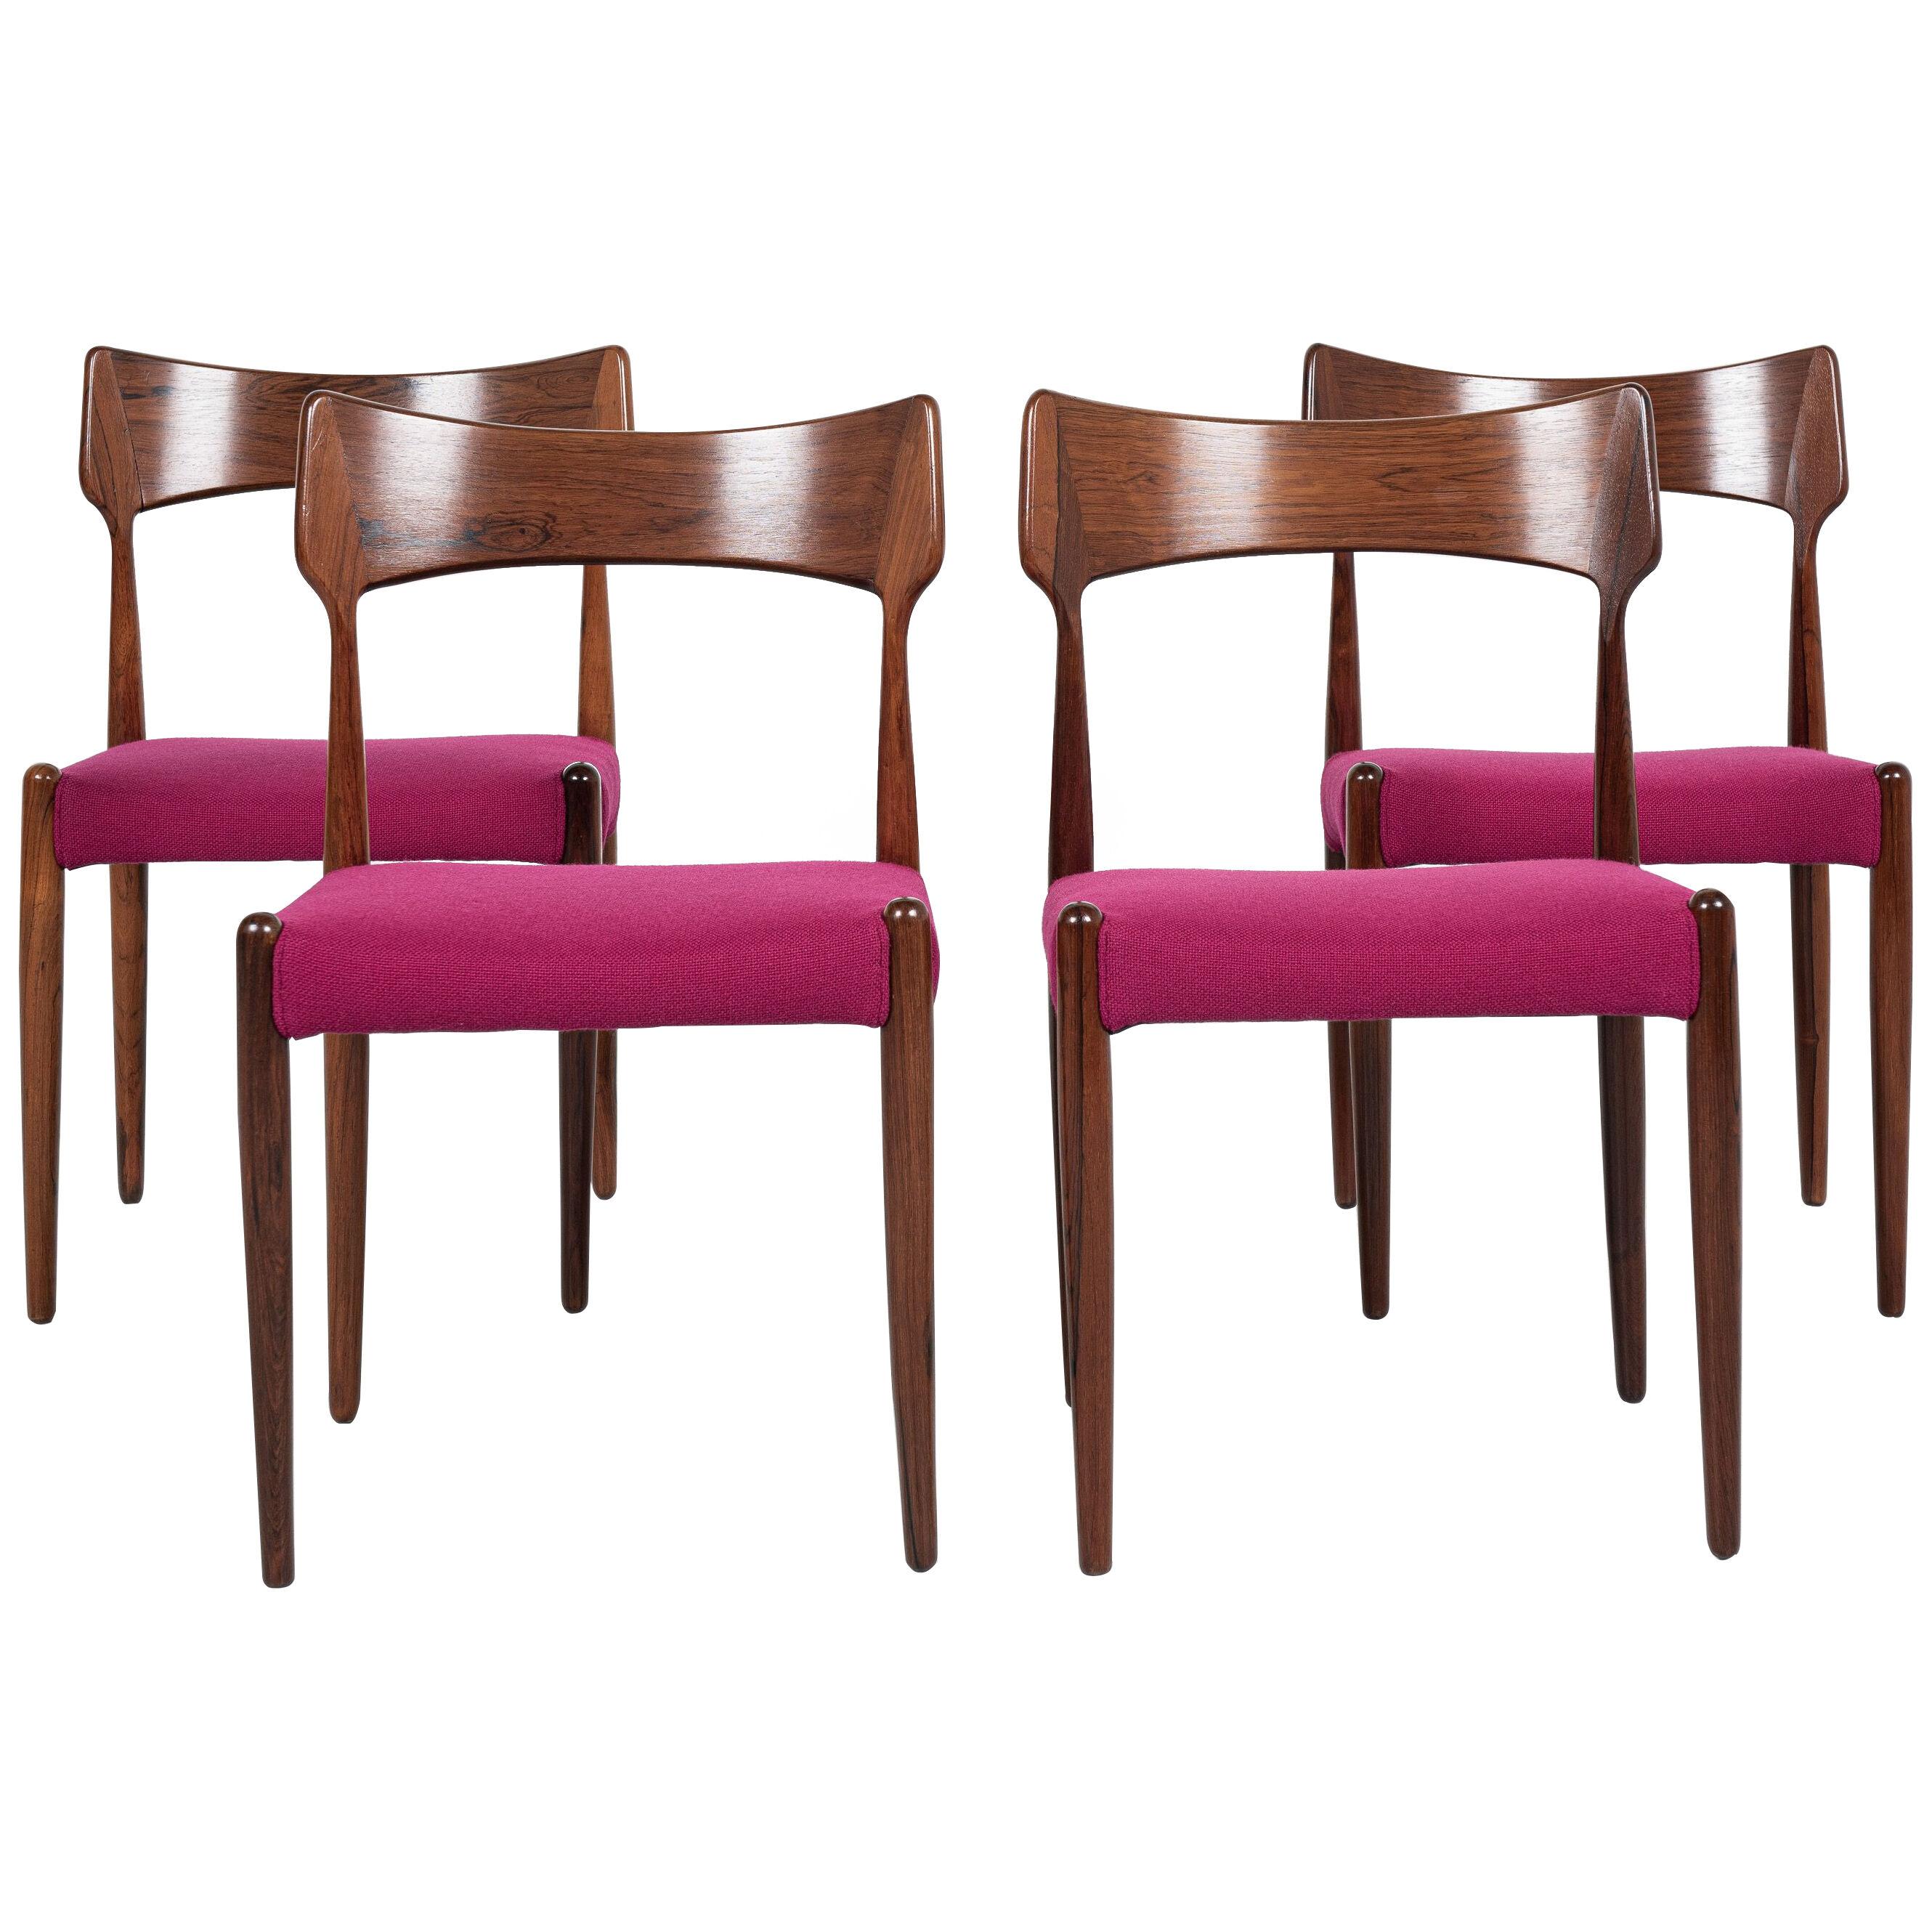 Midcentury Danish set of 4 chairs in rosewood by Bernhard Pedersen & Søn 1960s